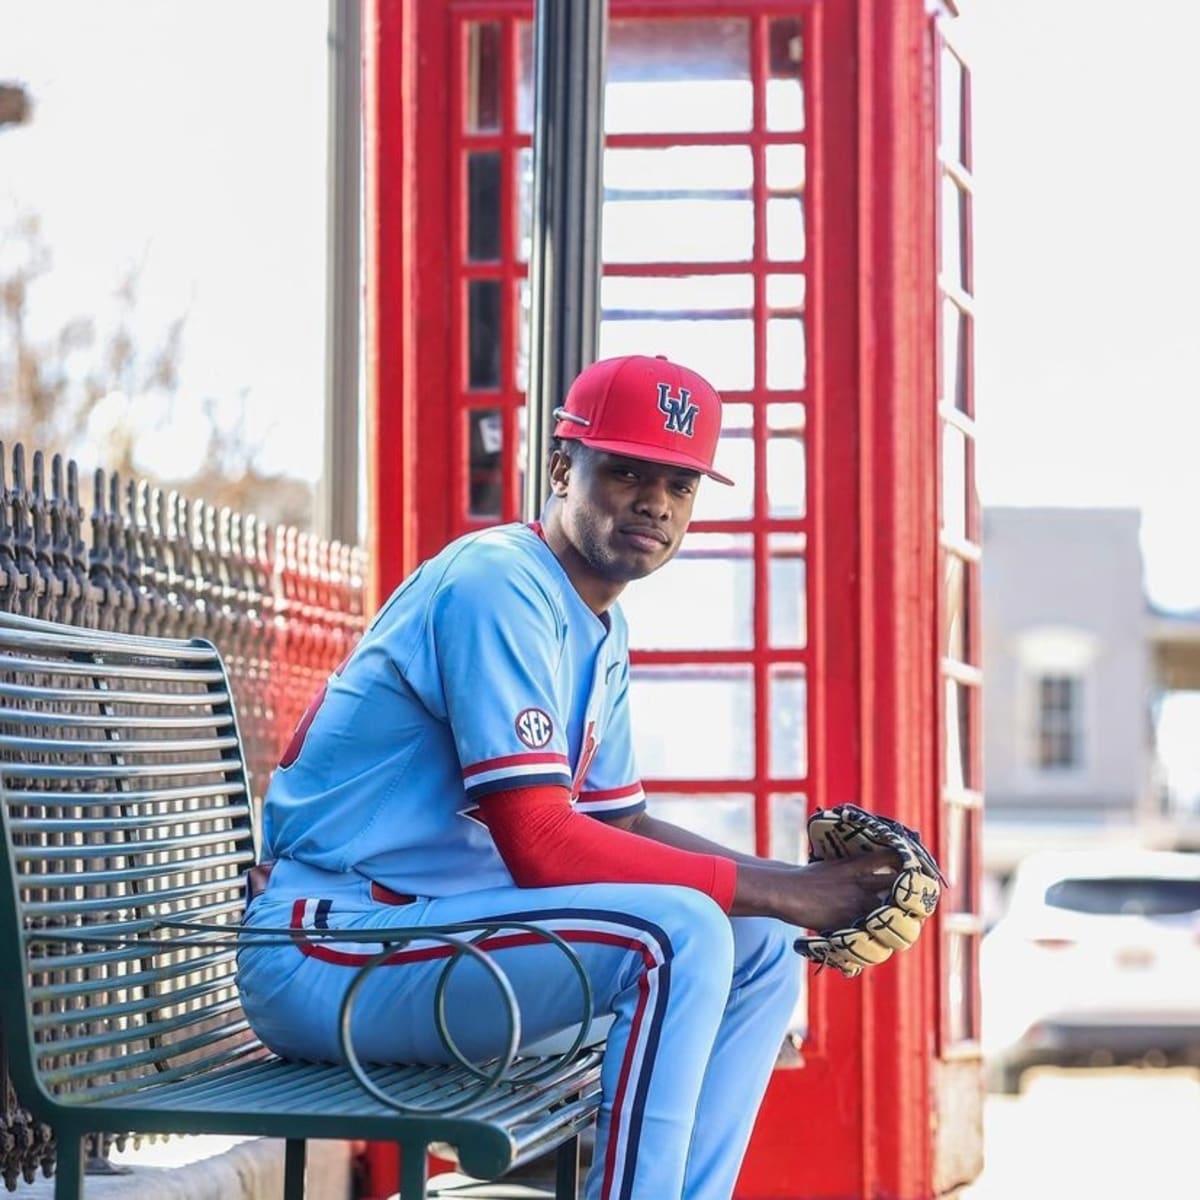 Ole Miss Baseball Holds Uniform Photoshoot on Oxford Square - The